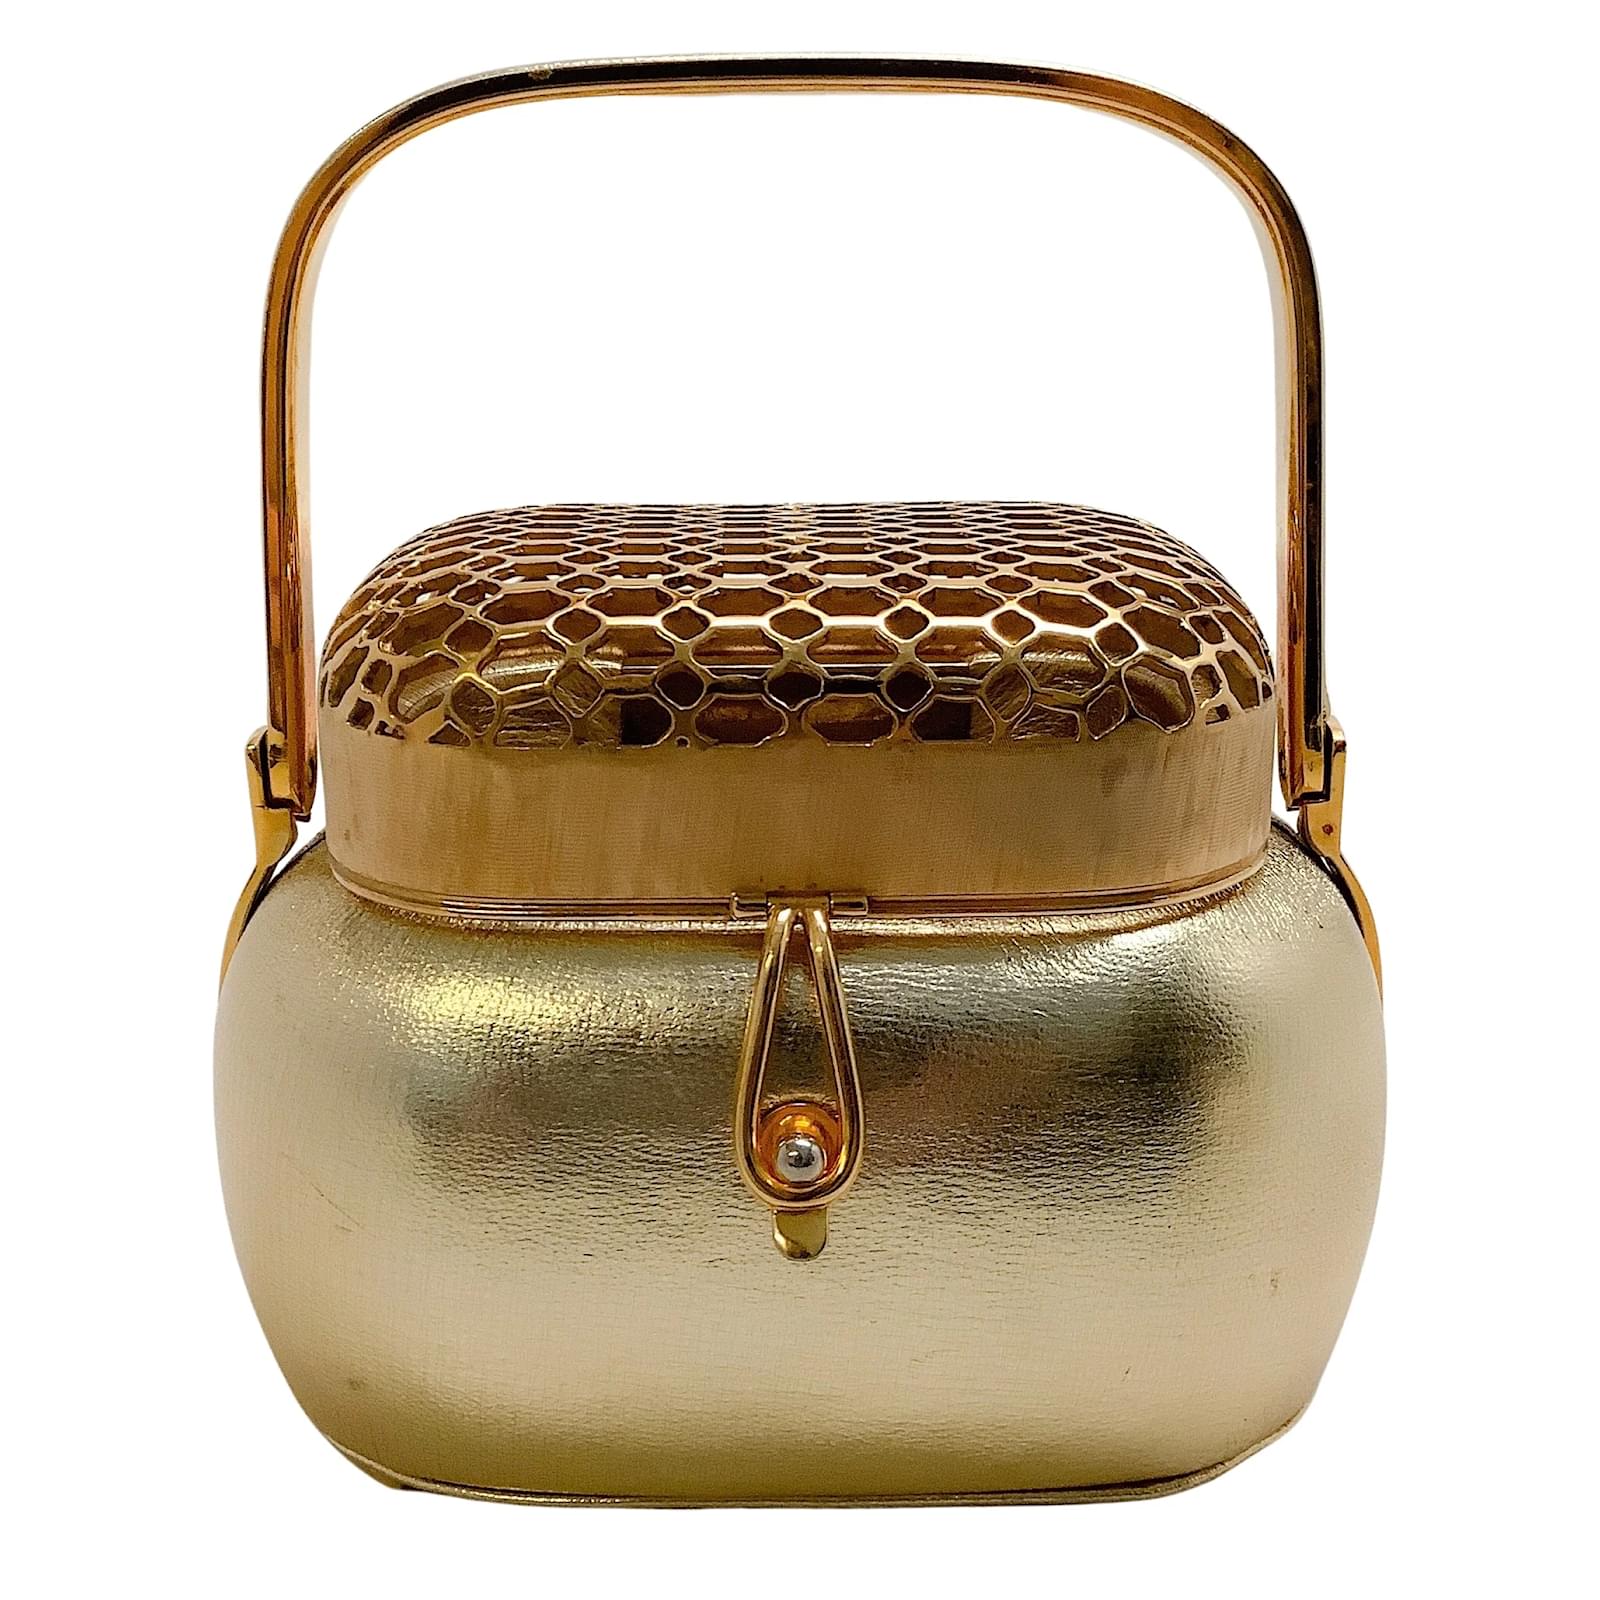 Judith Leiber Designer Gold Tone Jeweled Clutch Bag